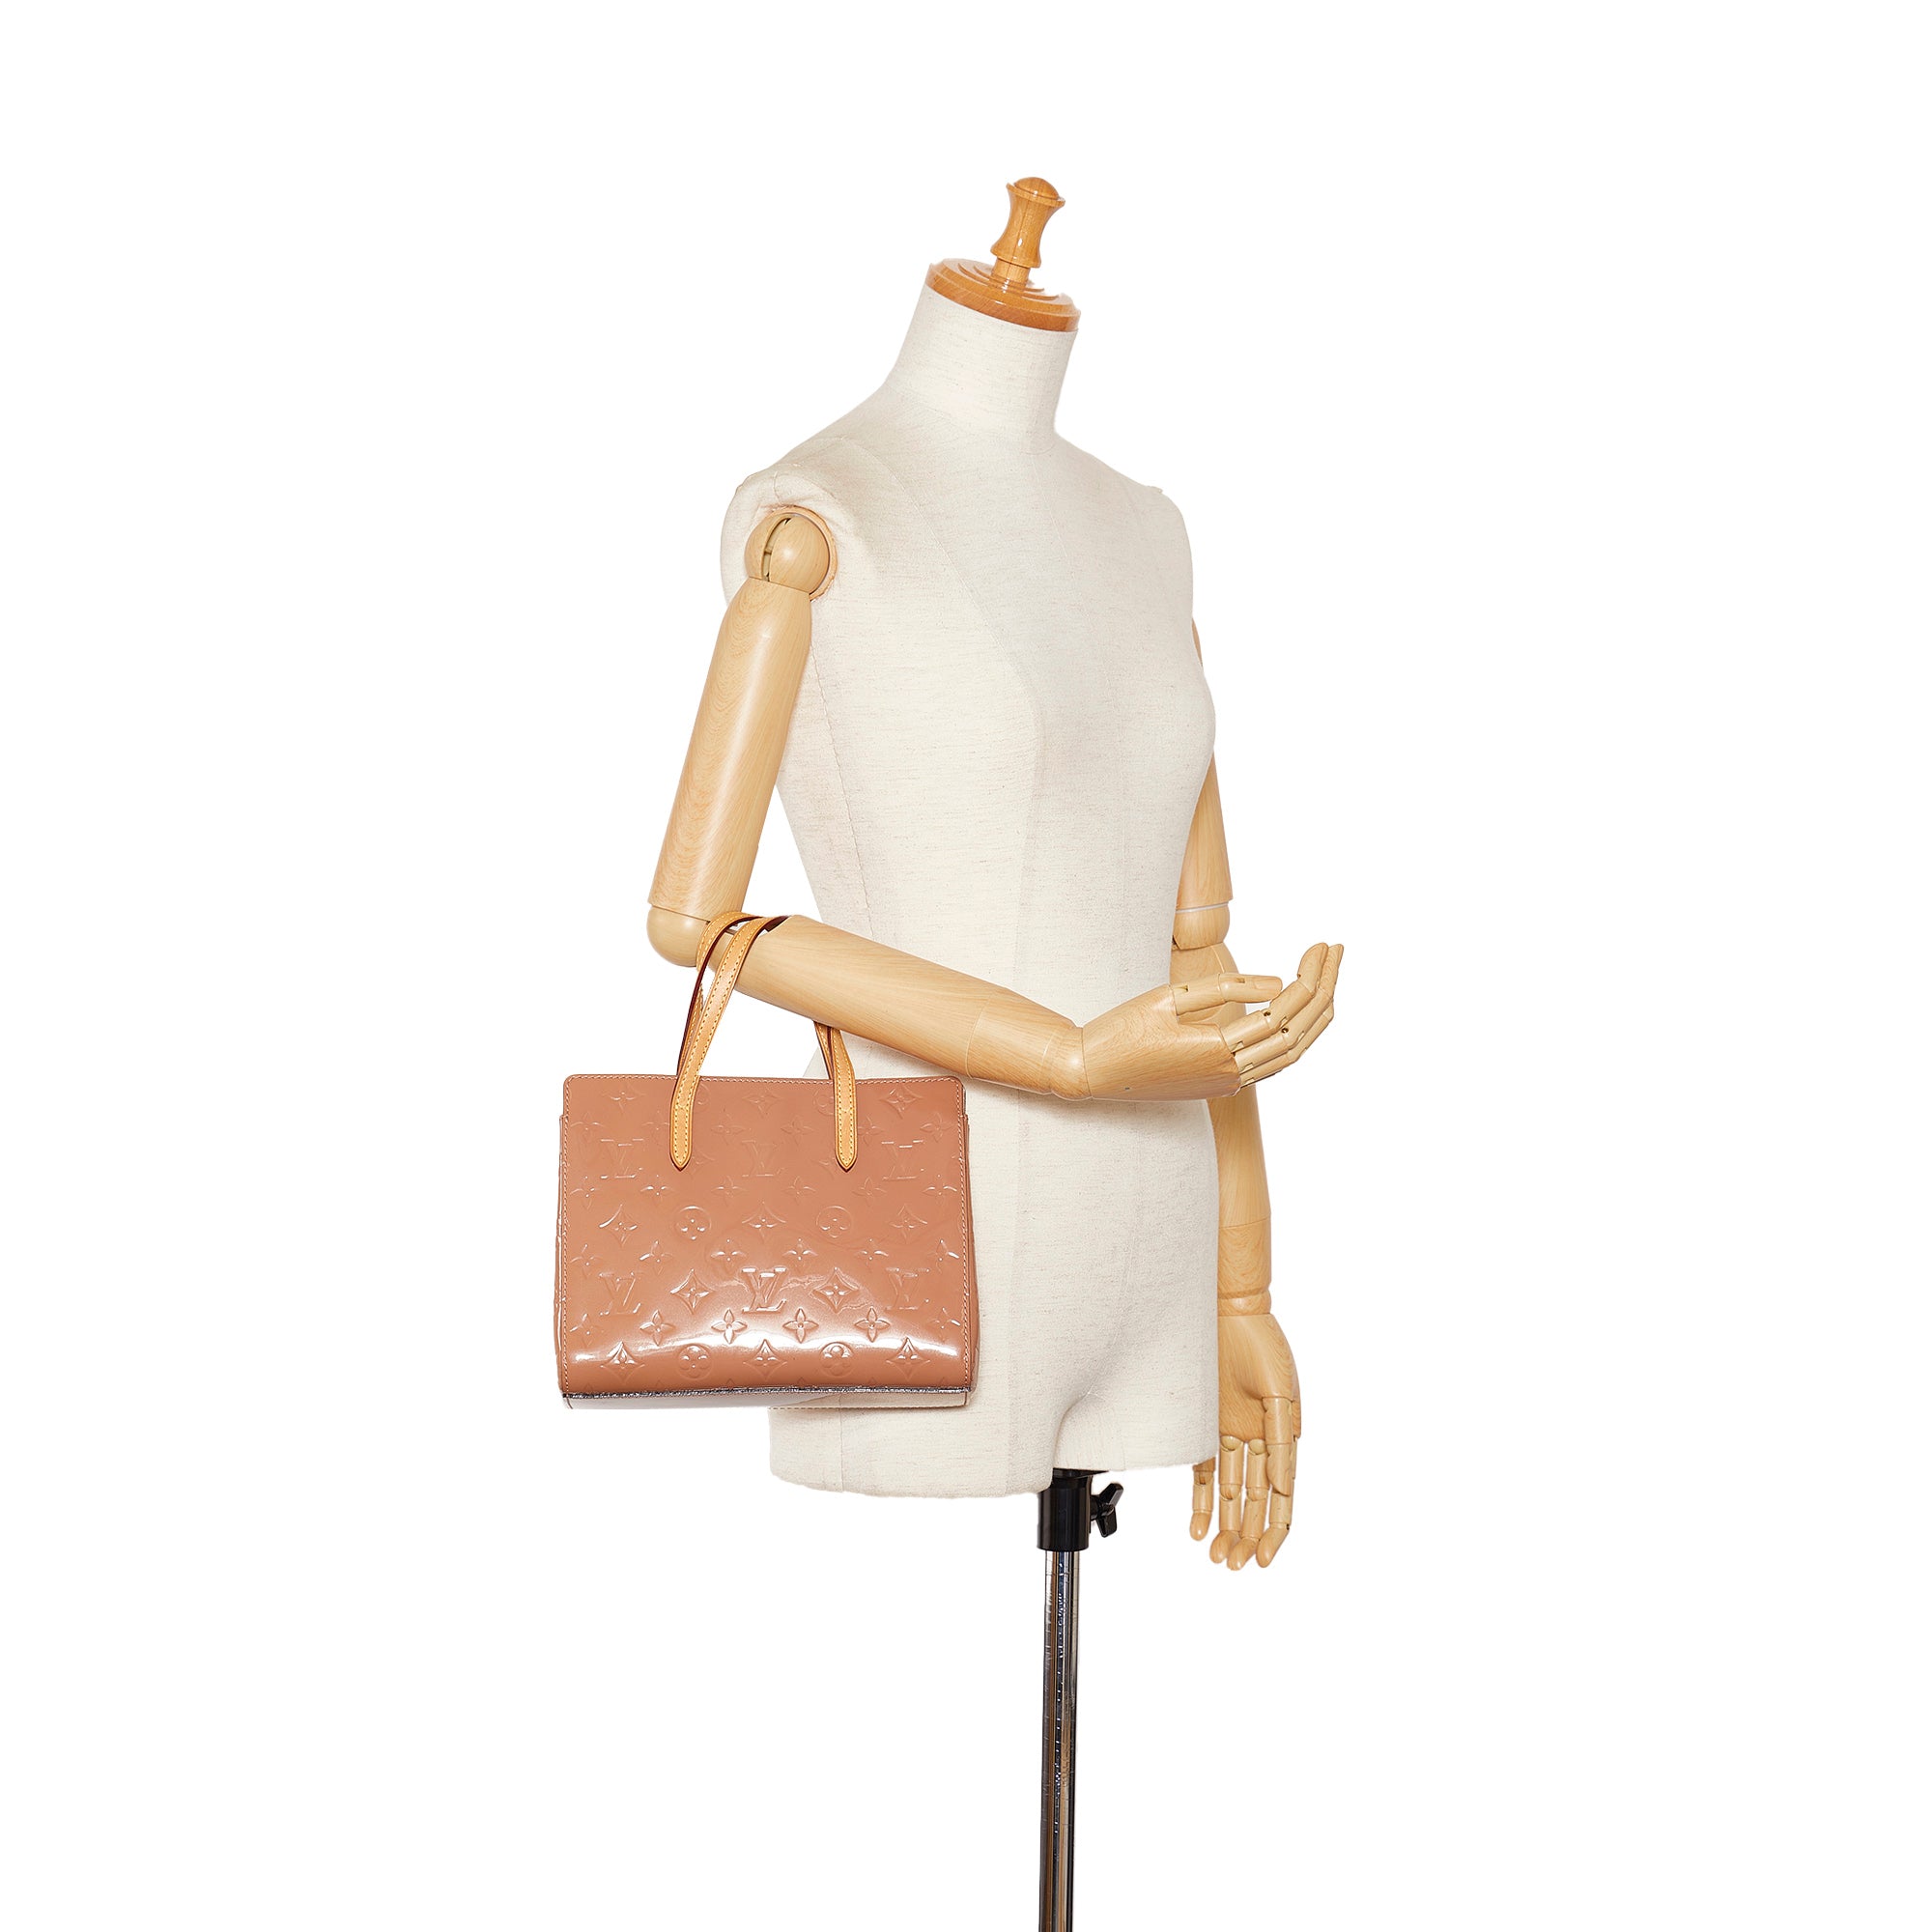 Tan Louis Vuitton Monogram Vernis Catalina BB Handbag